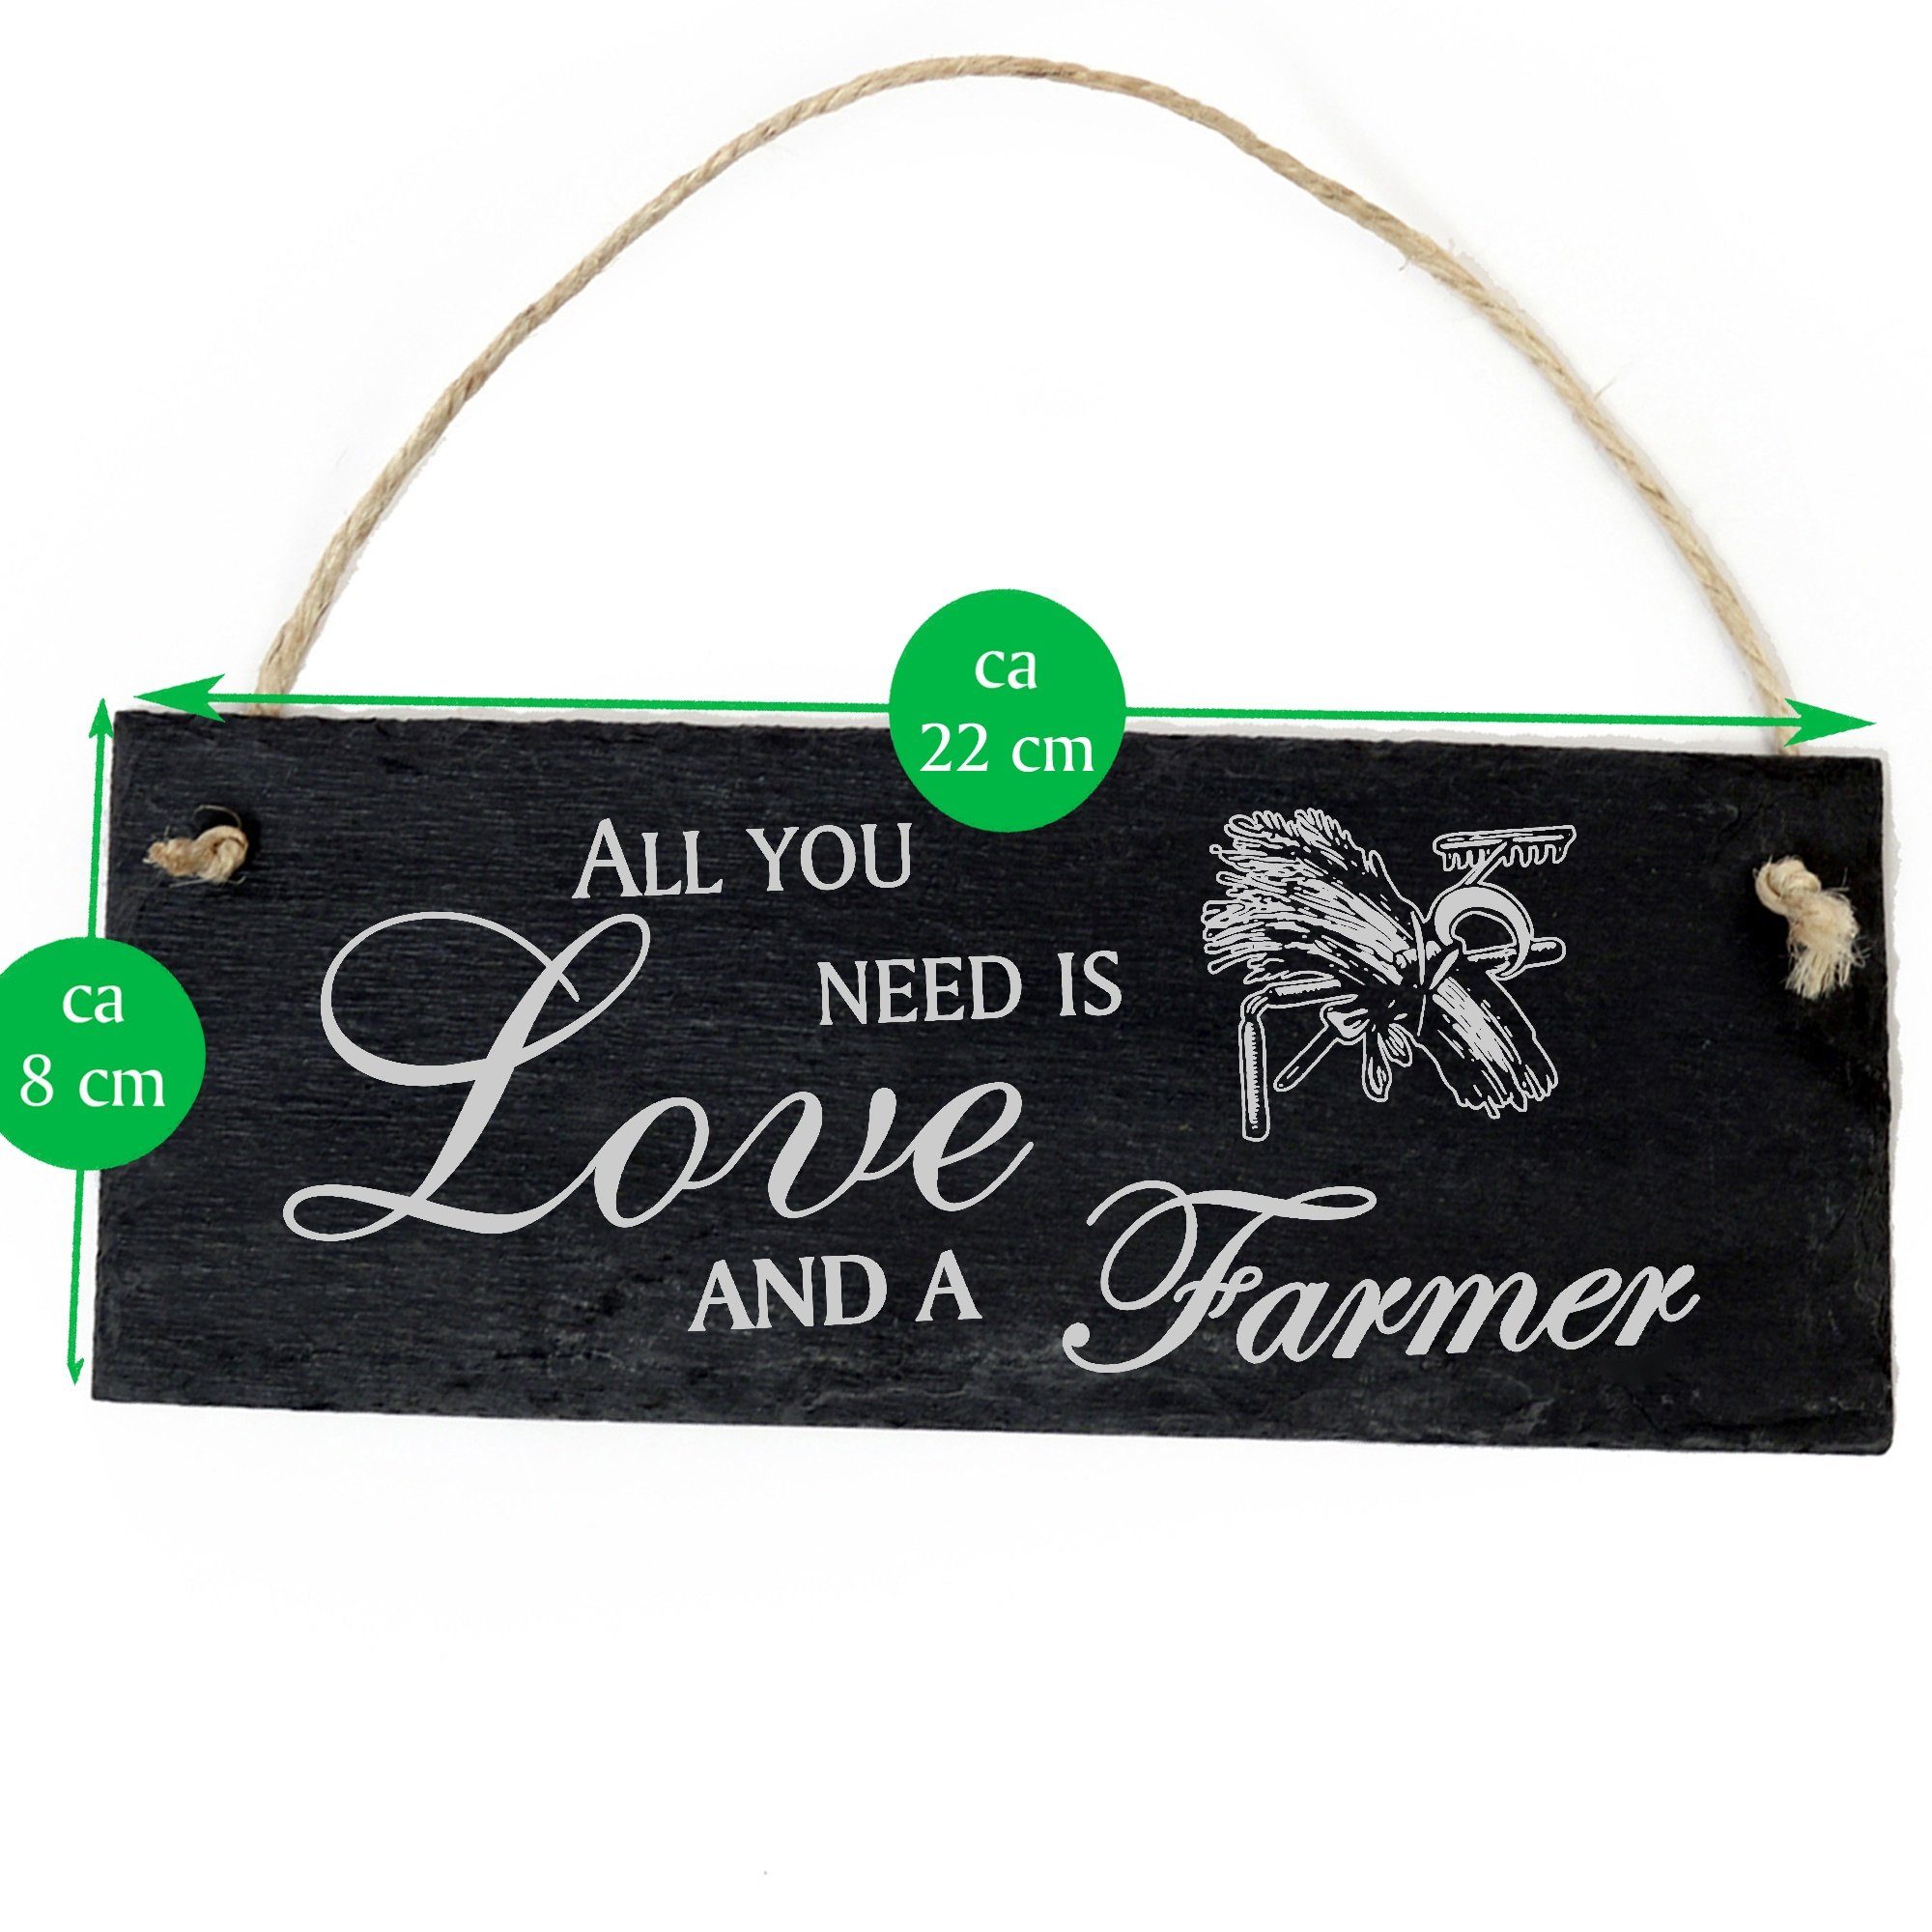 Dekolando Hängedekoration Bauer 22x8cm a Farmer Love All and need is you